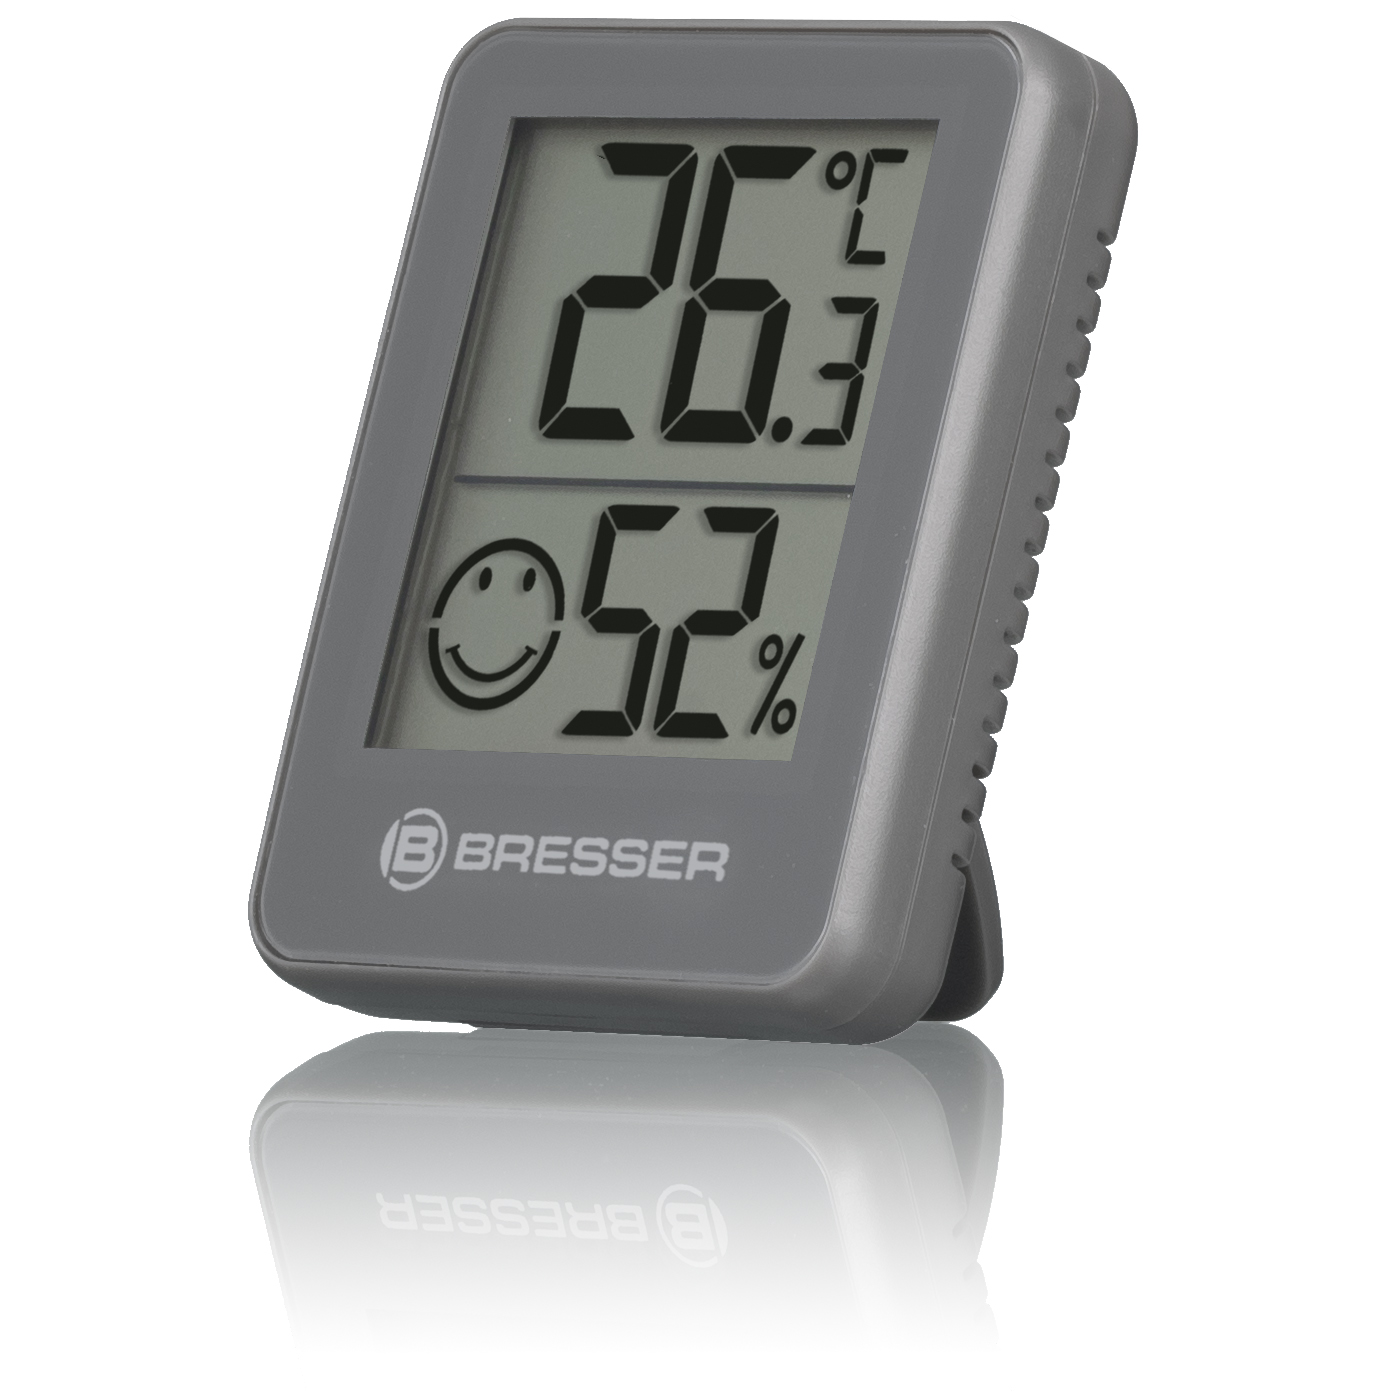 Thermo-/Hygrometer 6er-Set Indikator Temeo Hygro Wetterstation BRESSER